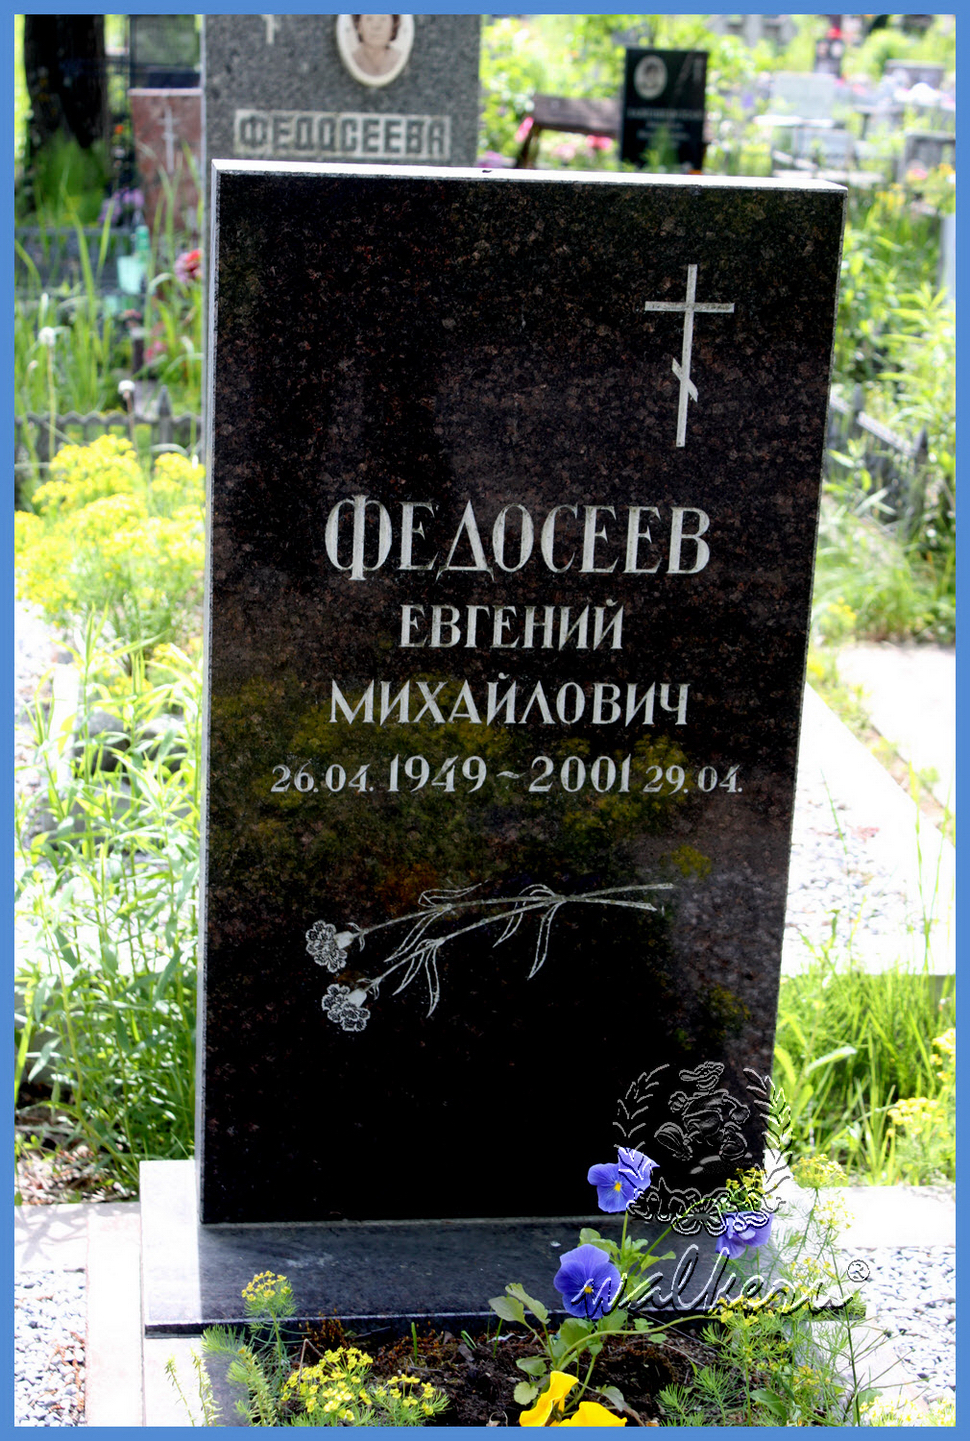 Могила Федосеева Е.М. на Ковалёвском кладбище